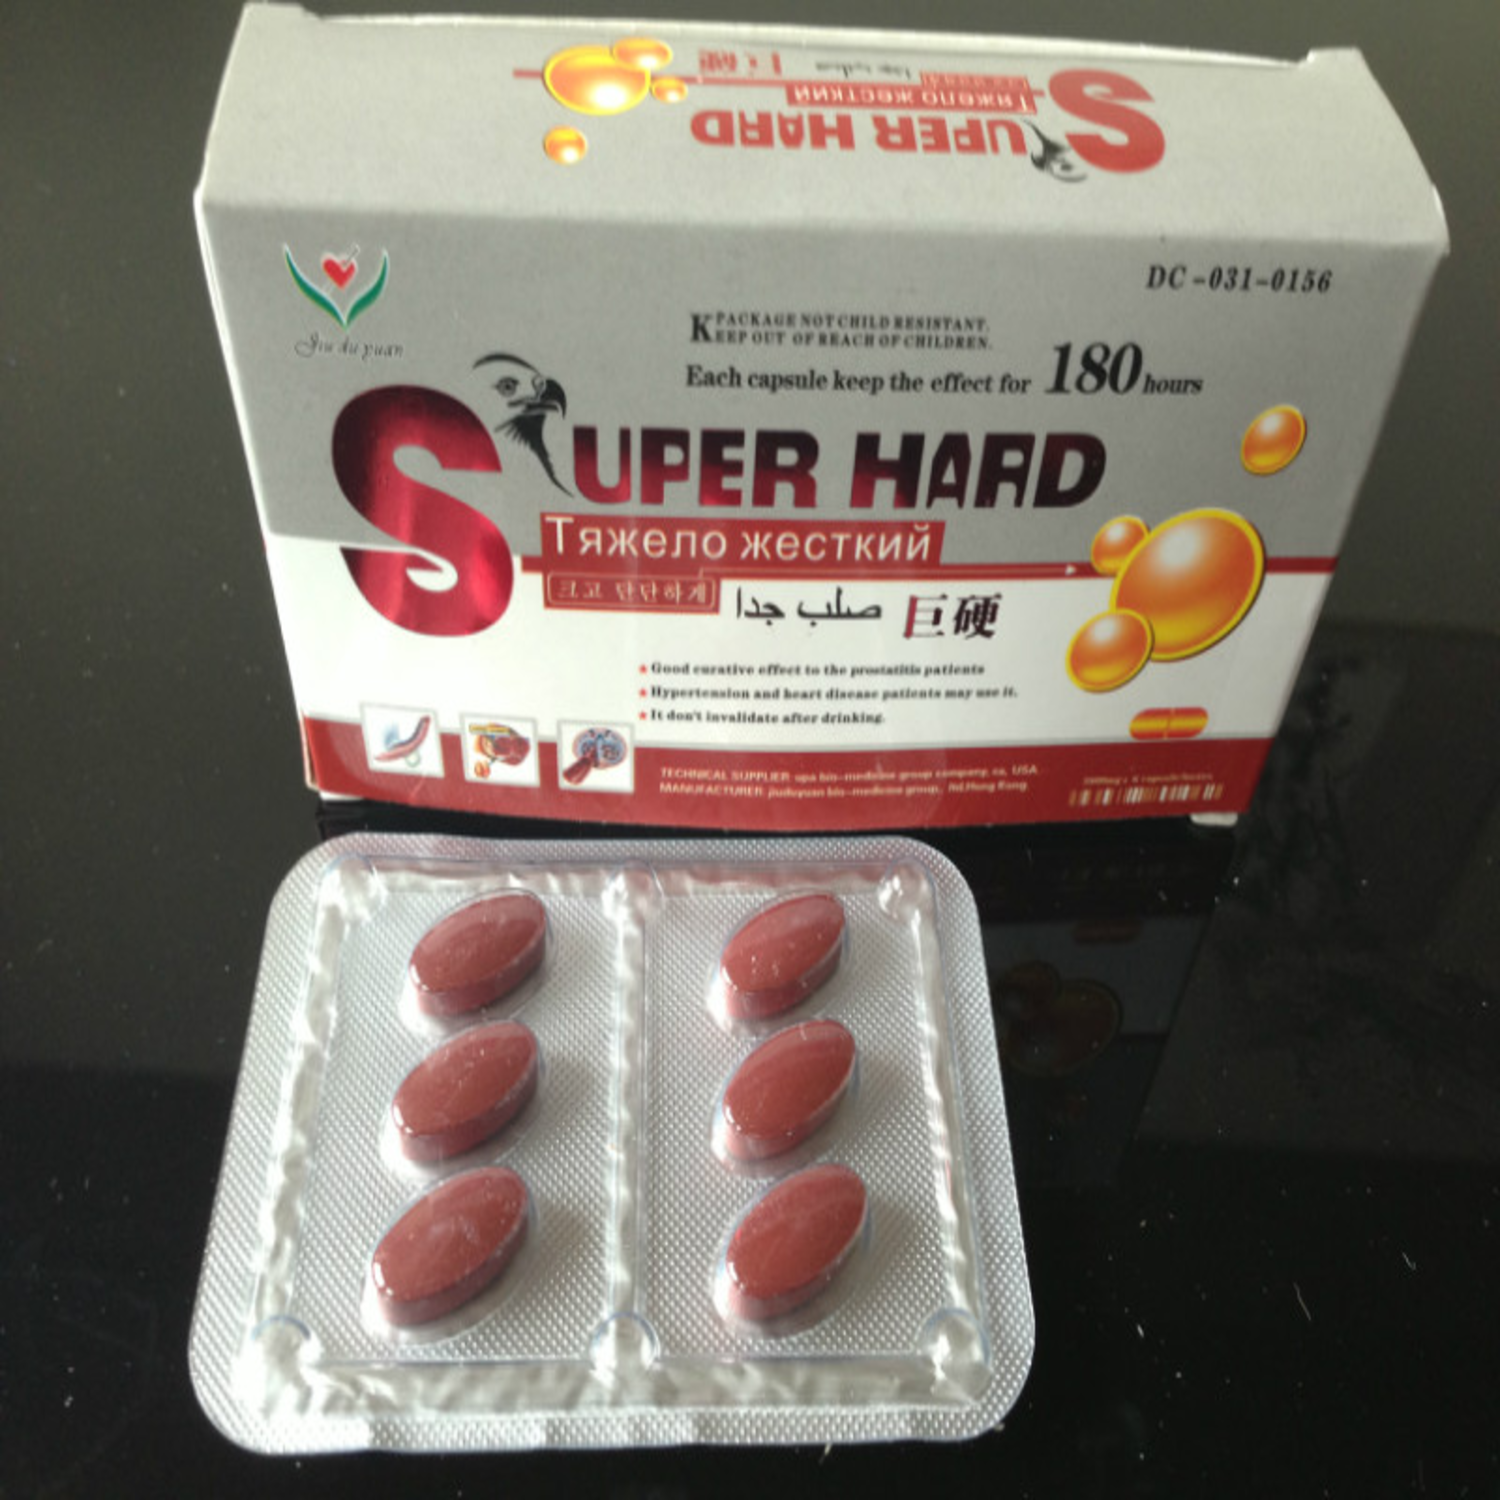 Super Hard Male Sexual Enhancement Pills